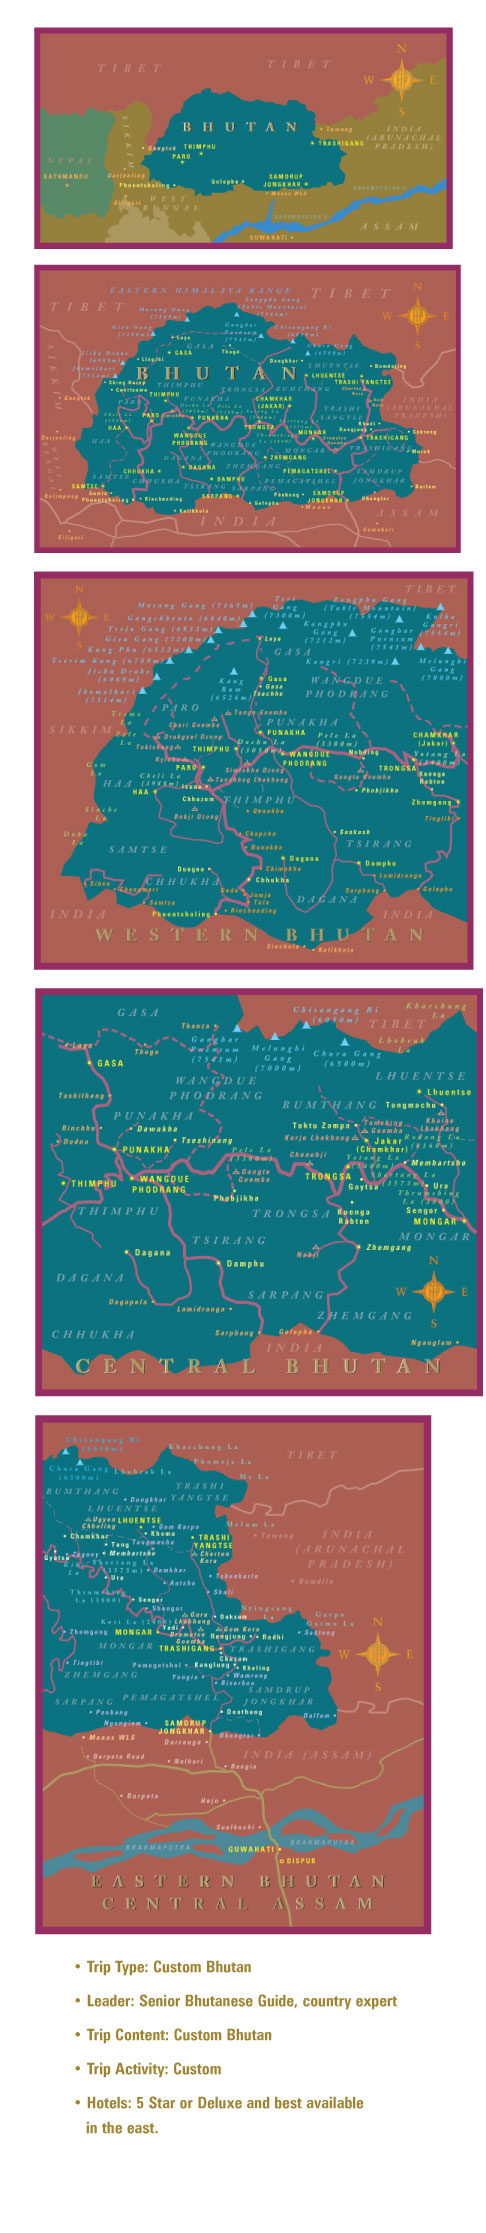 Far Fung Places Custom Bhutan maps